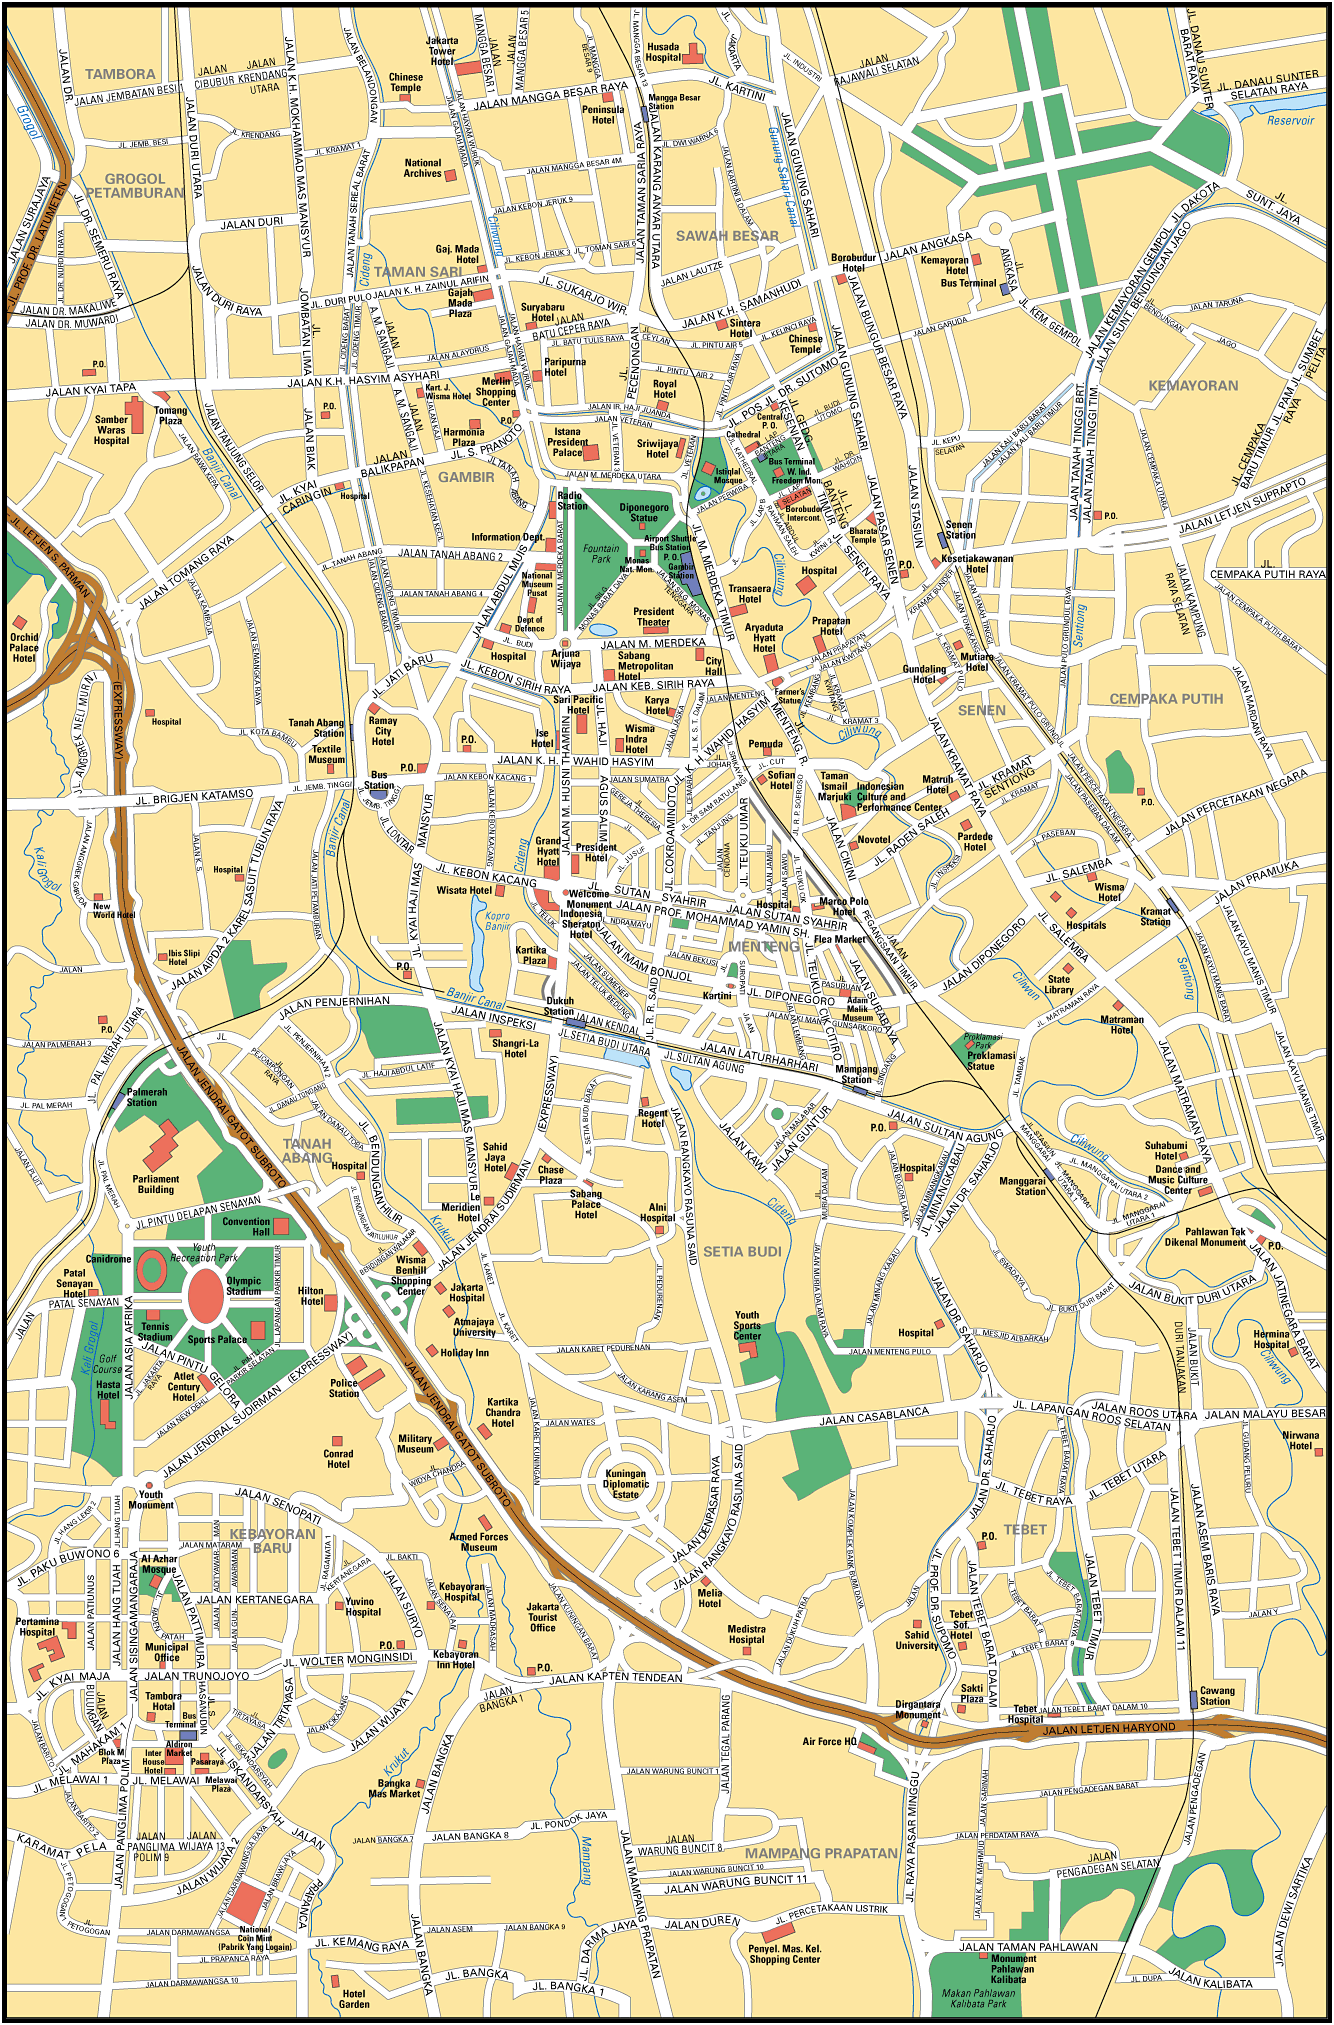 Map of Jakarta. City maps of Indonesia — Planetolog.com